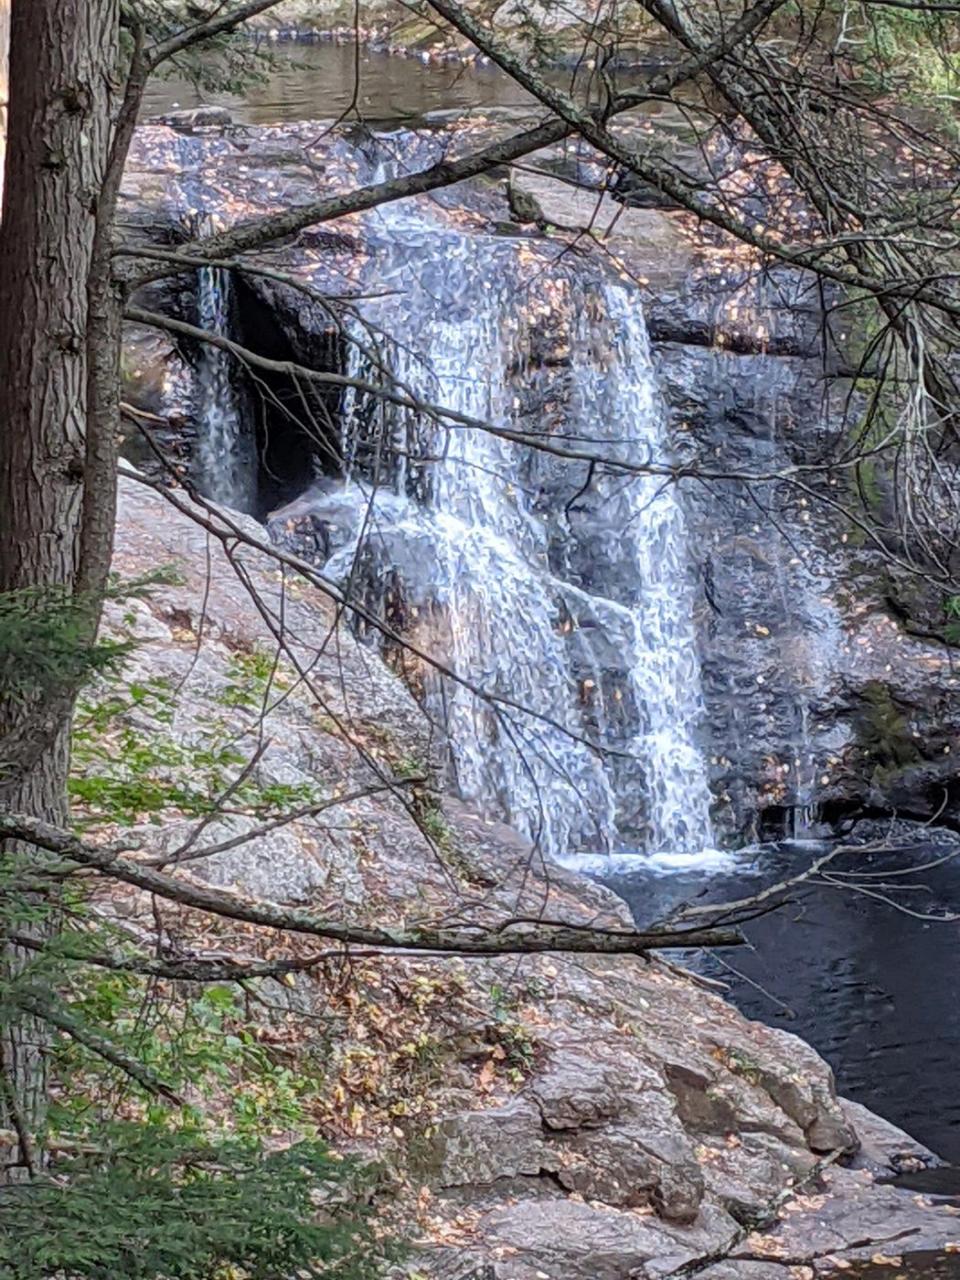 Doane's Falls in Royalston.